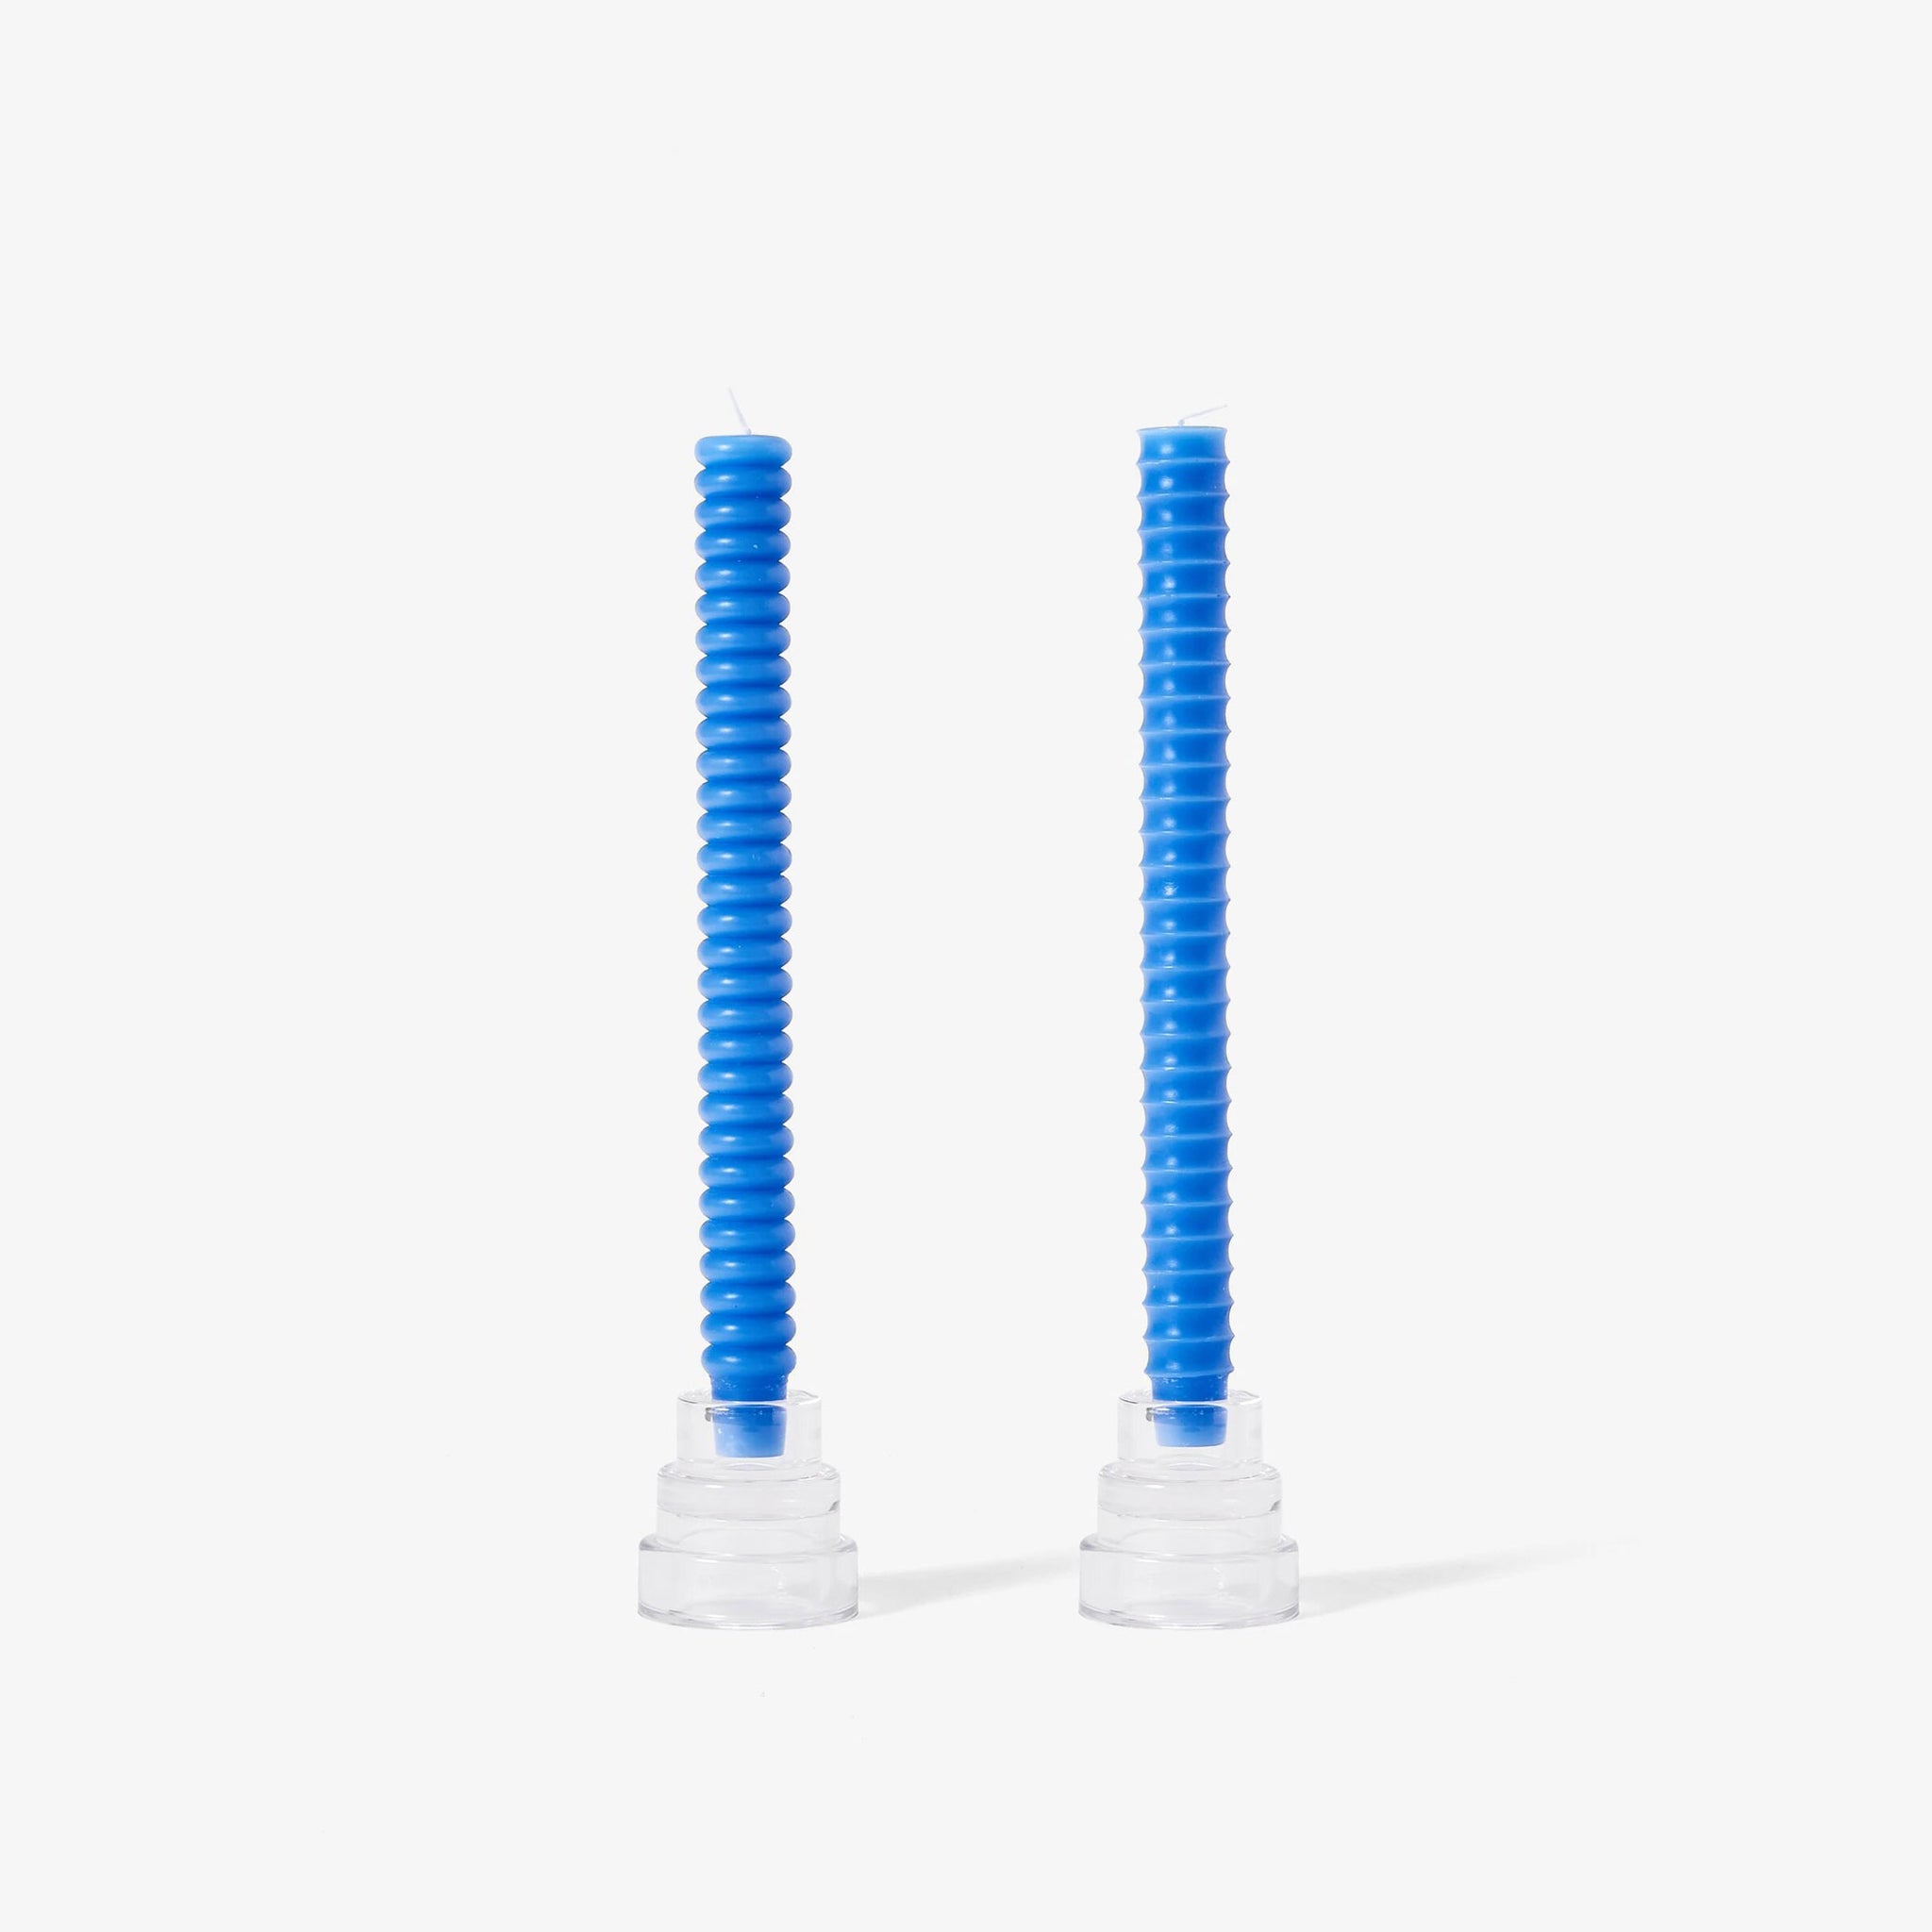 Areaware Dusen Dusen Taper Candles - Set of 2 - Blue